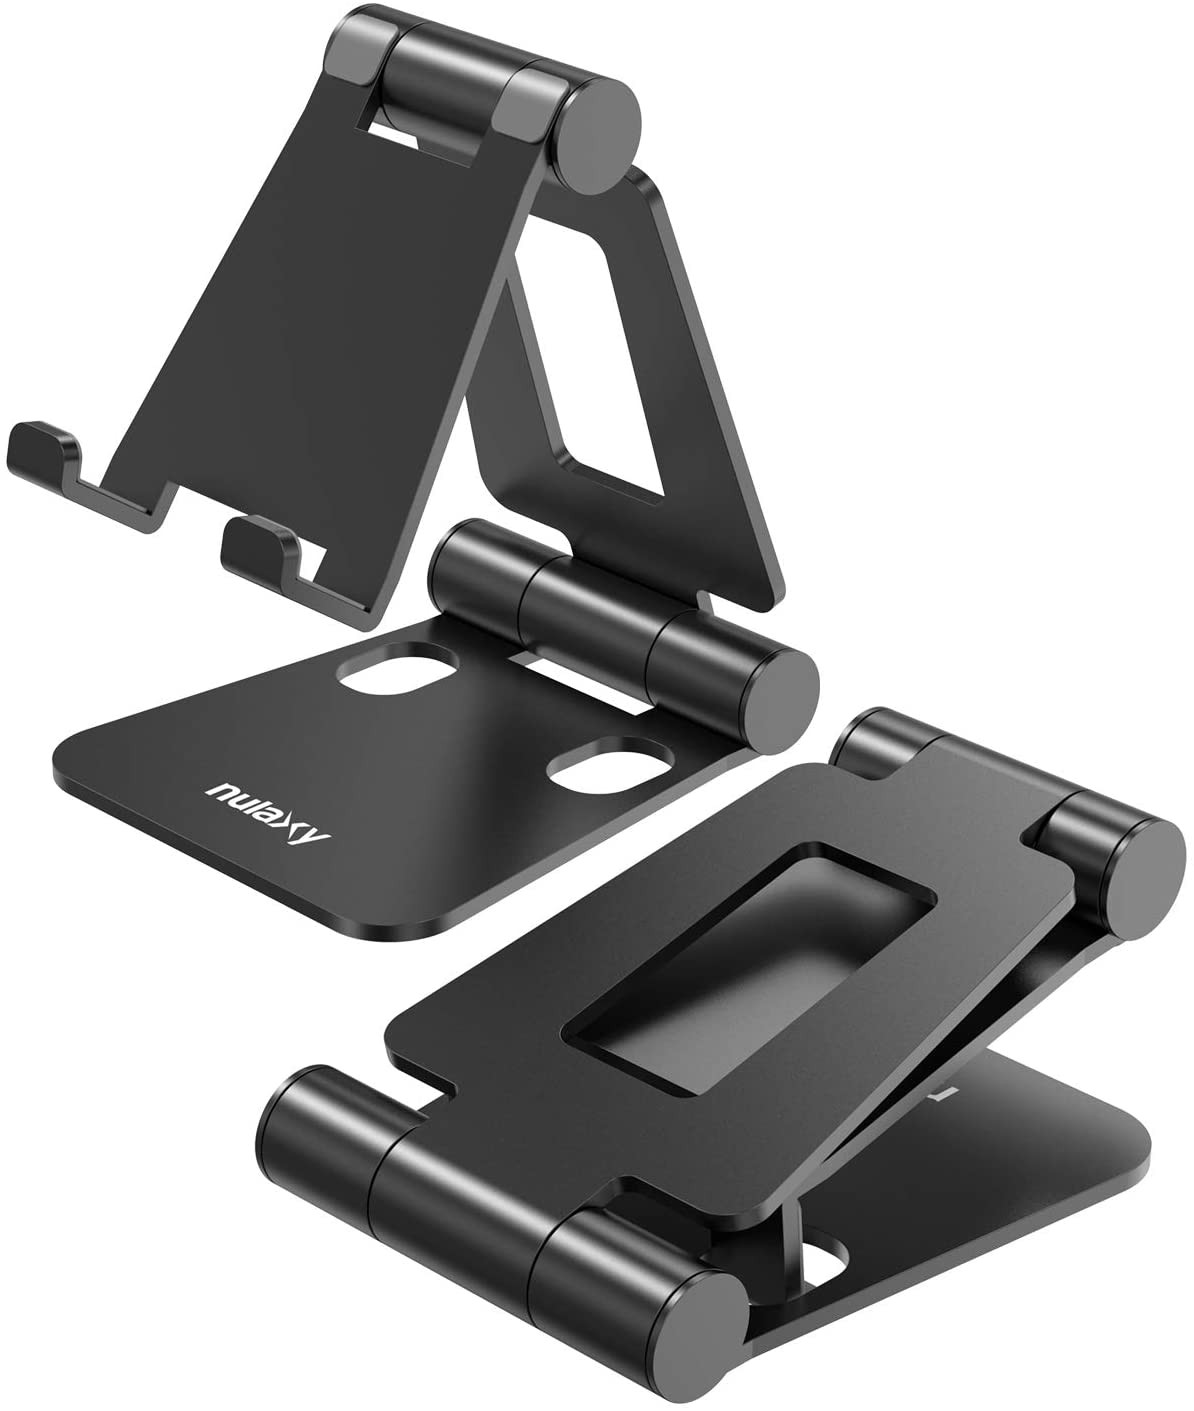 A4 Cell Phone Stand, Fully Foldable, Adjustable Desktop Phone Holder Cradle Dock Compatible